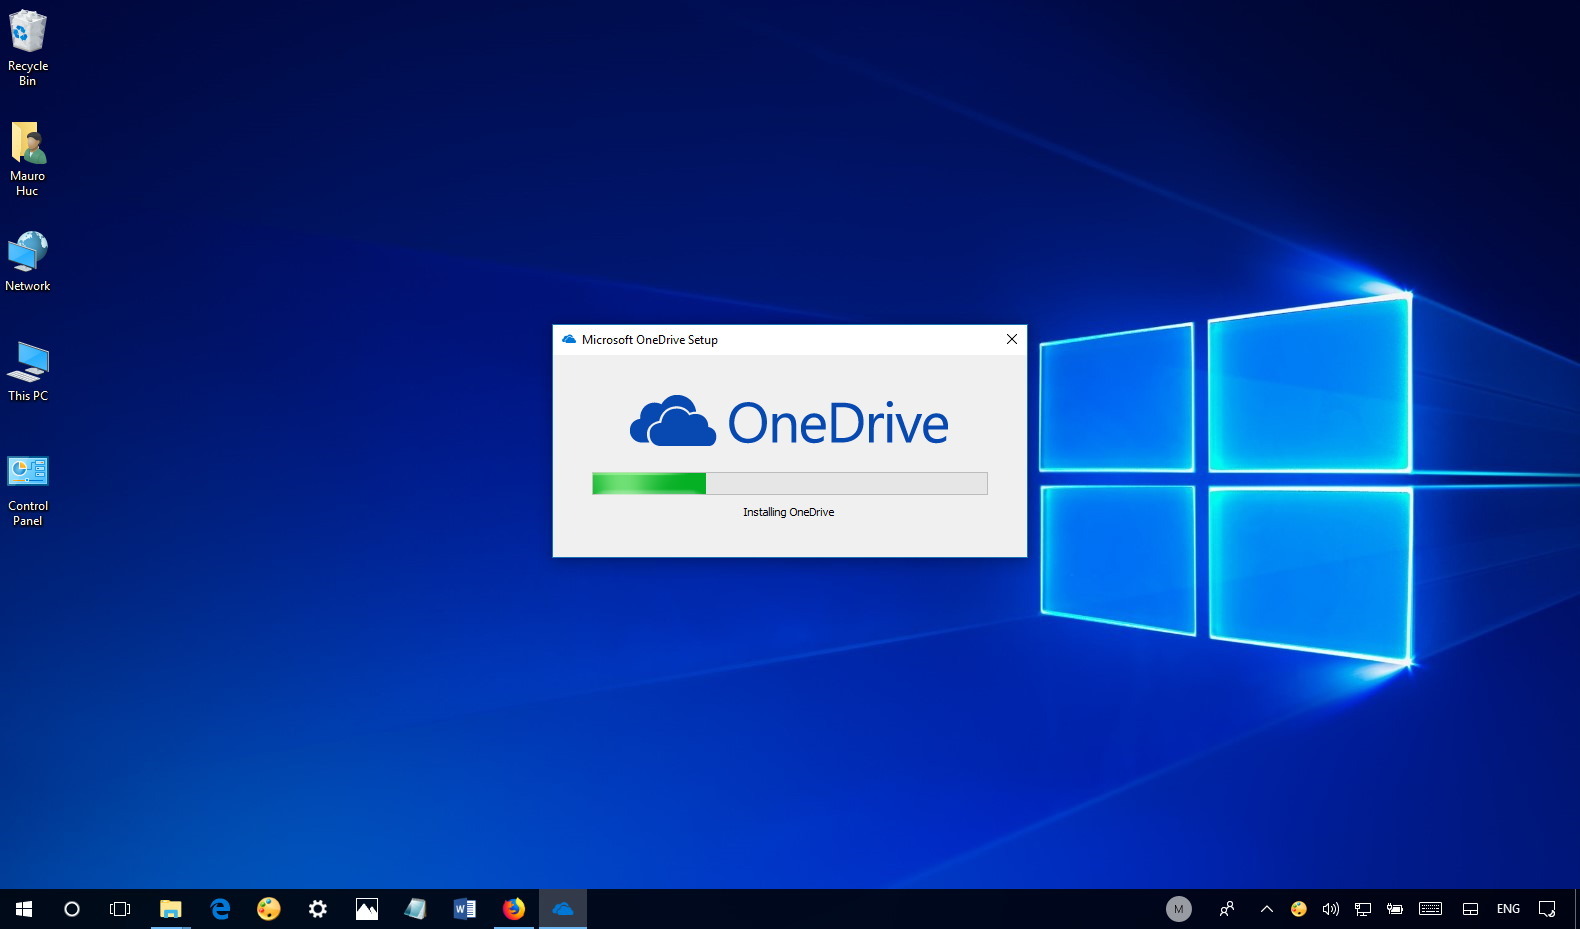 Installing OneDrive on Windows 10